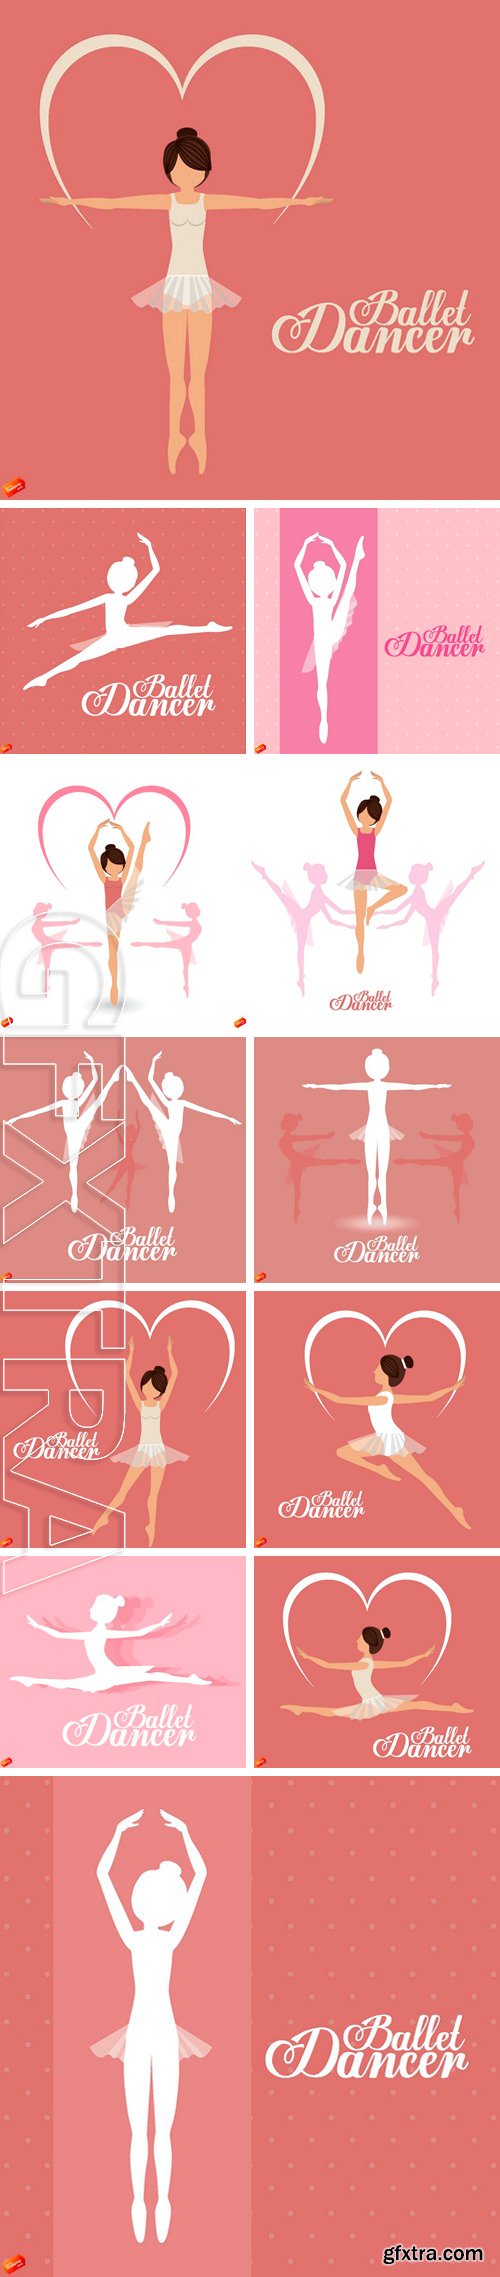 Stock Vectors - Ballet dancer design , vector illustration